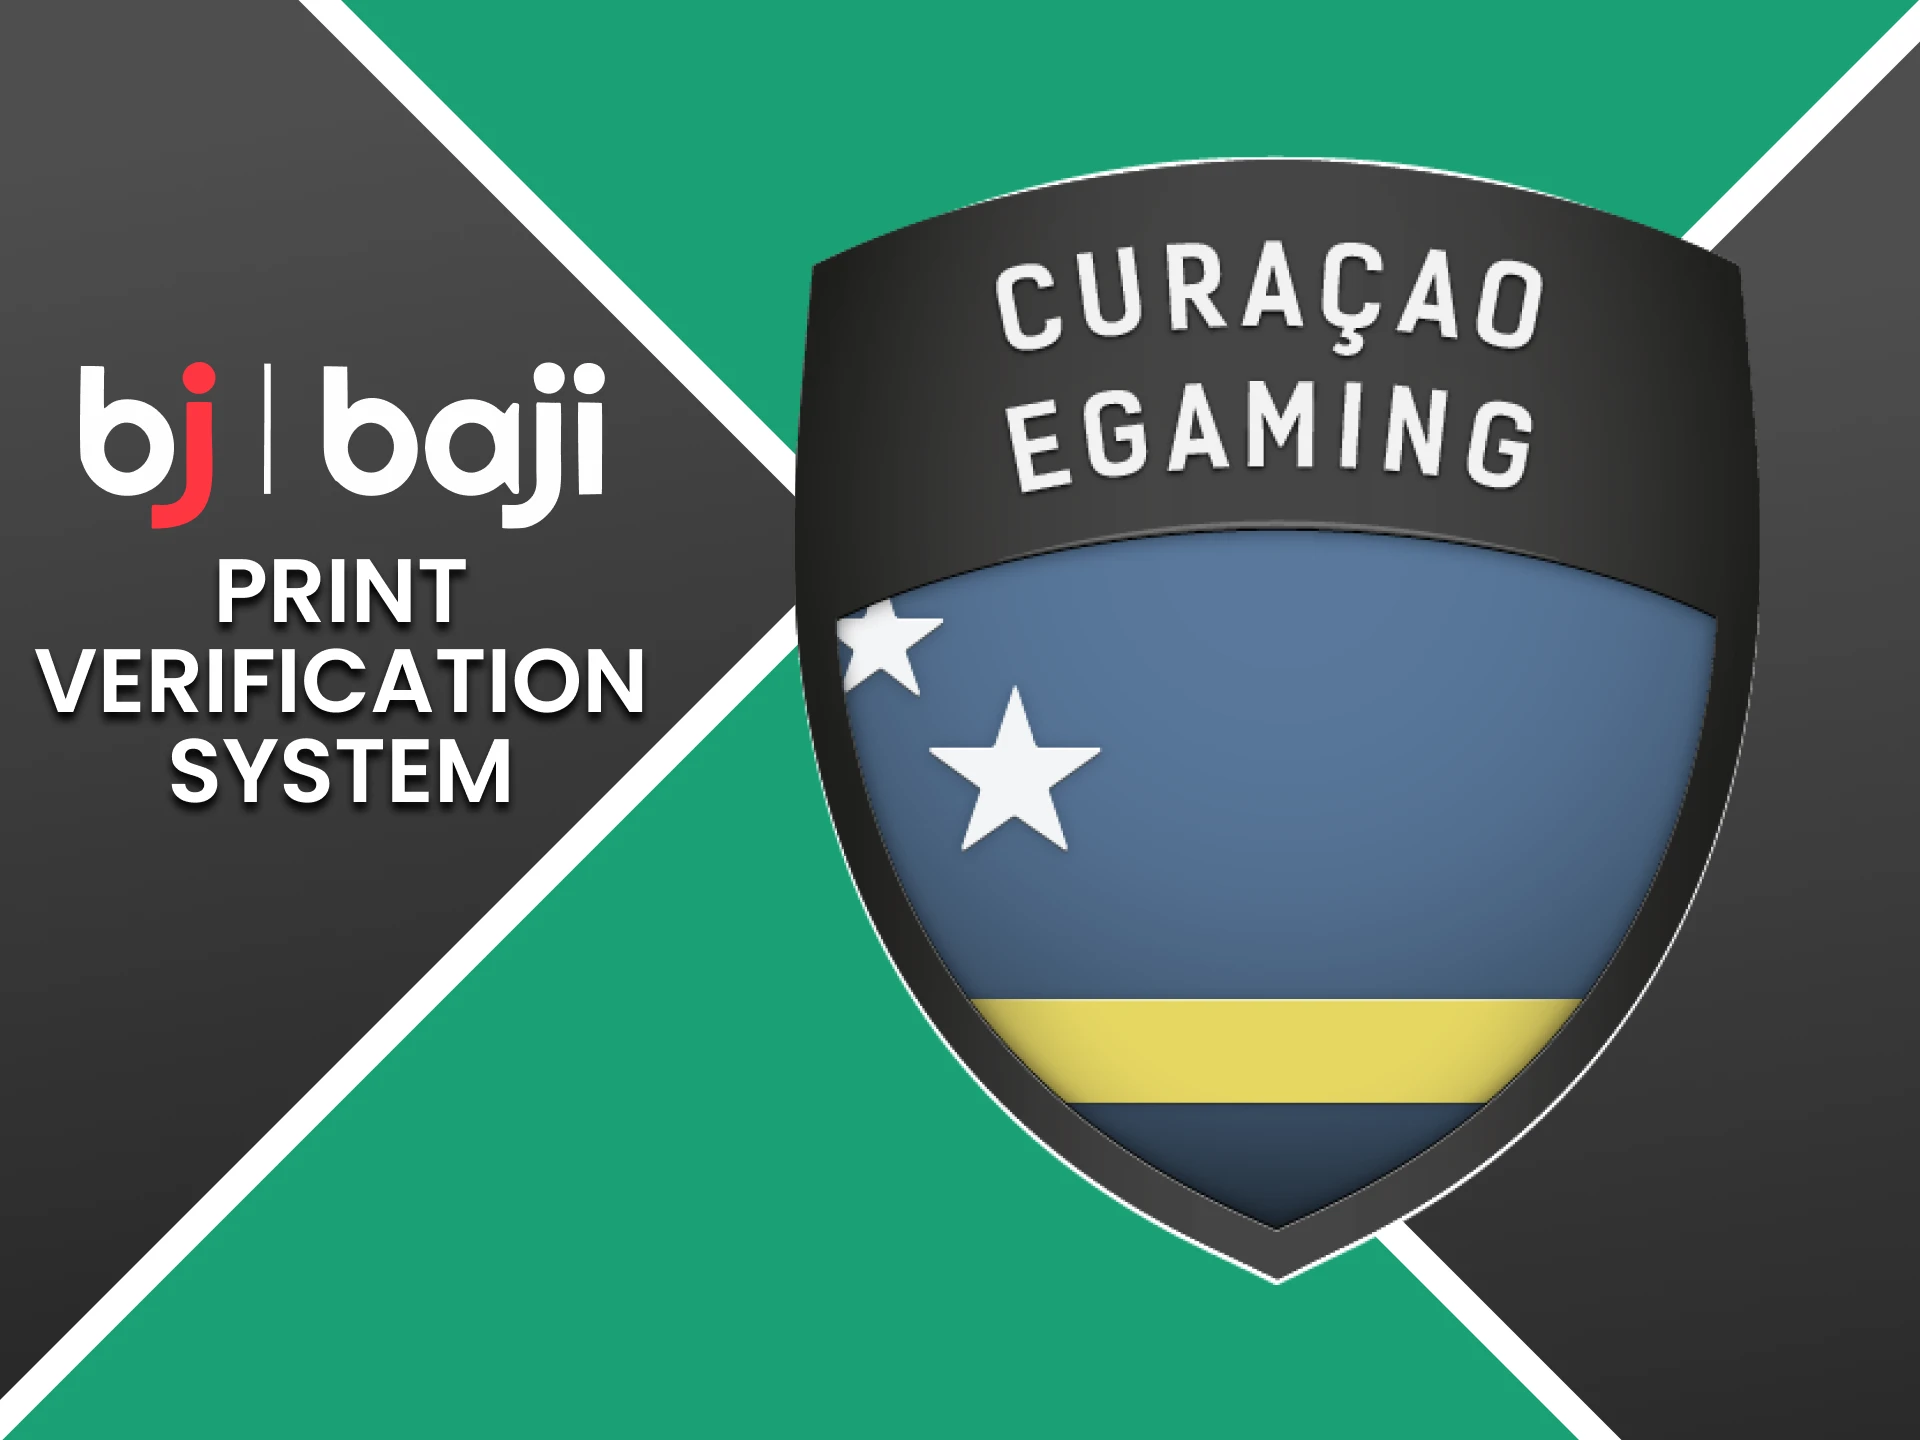 Learn how verification works on the Baji website.